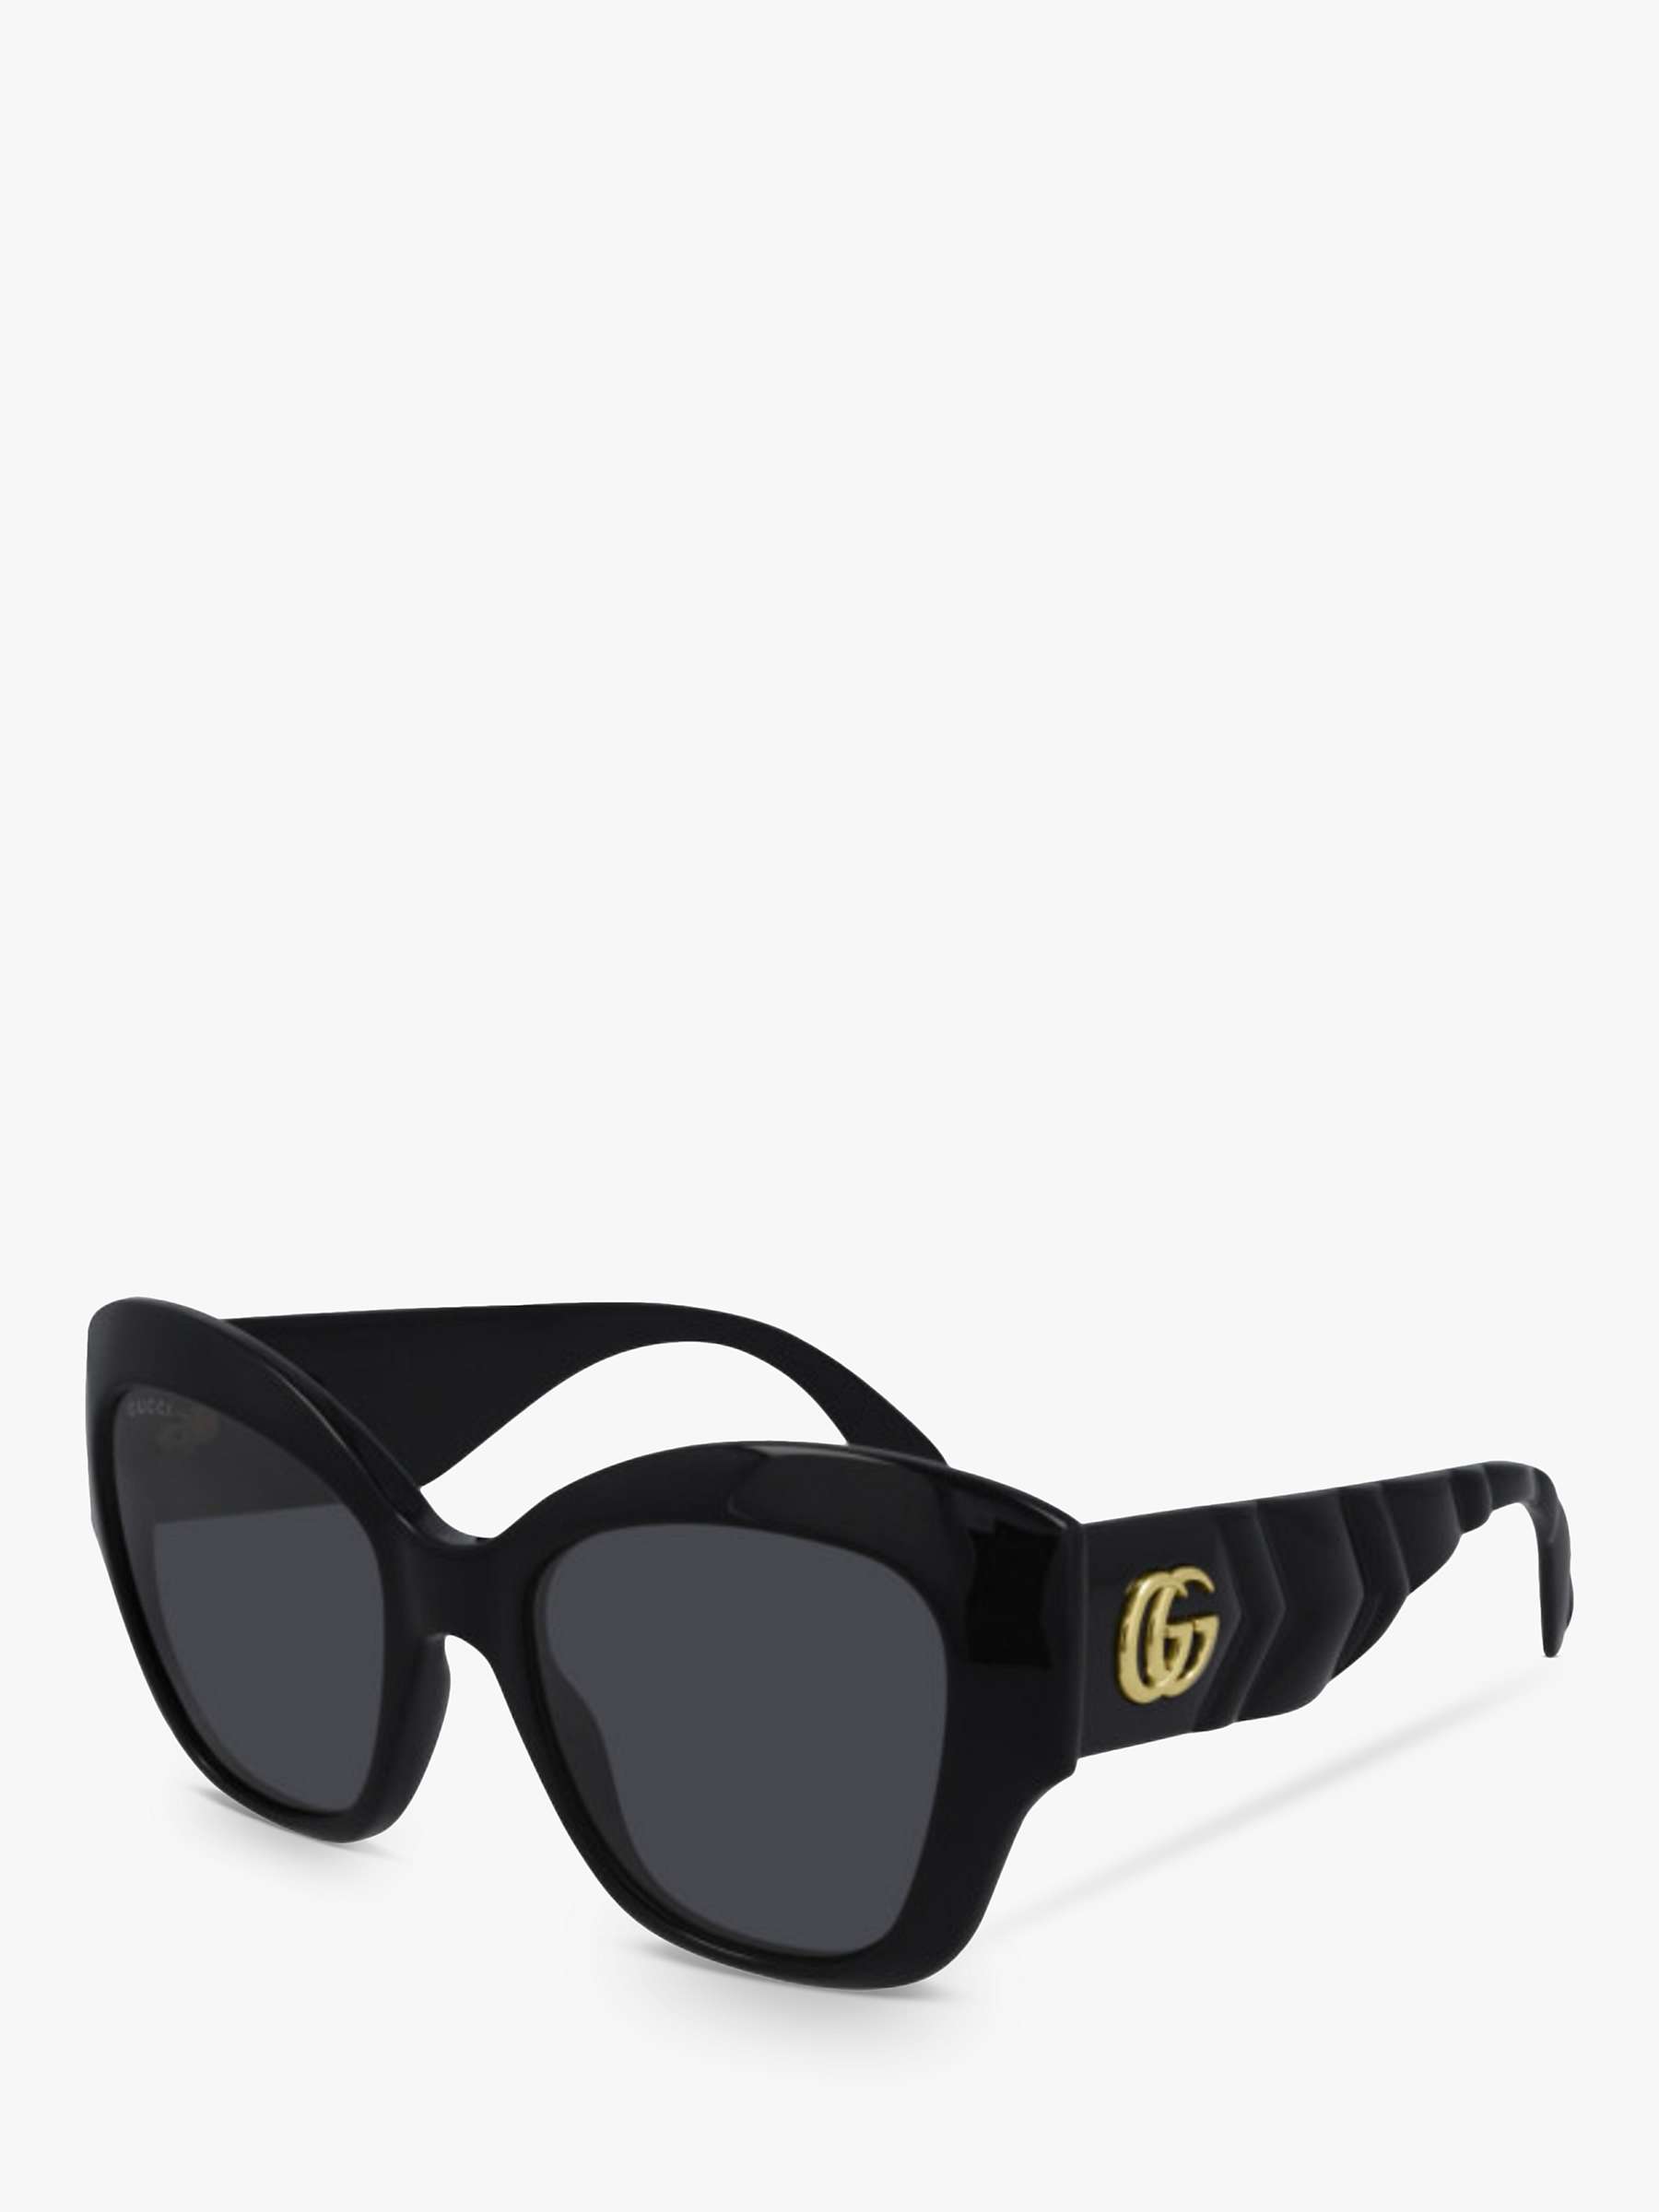 Buy Gucci GG0808S Women's Cat's Eye Sunglasses, Black Shine/Grey Online at johnlewis.com